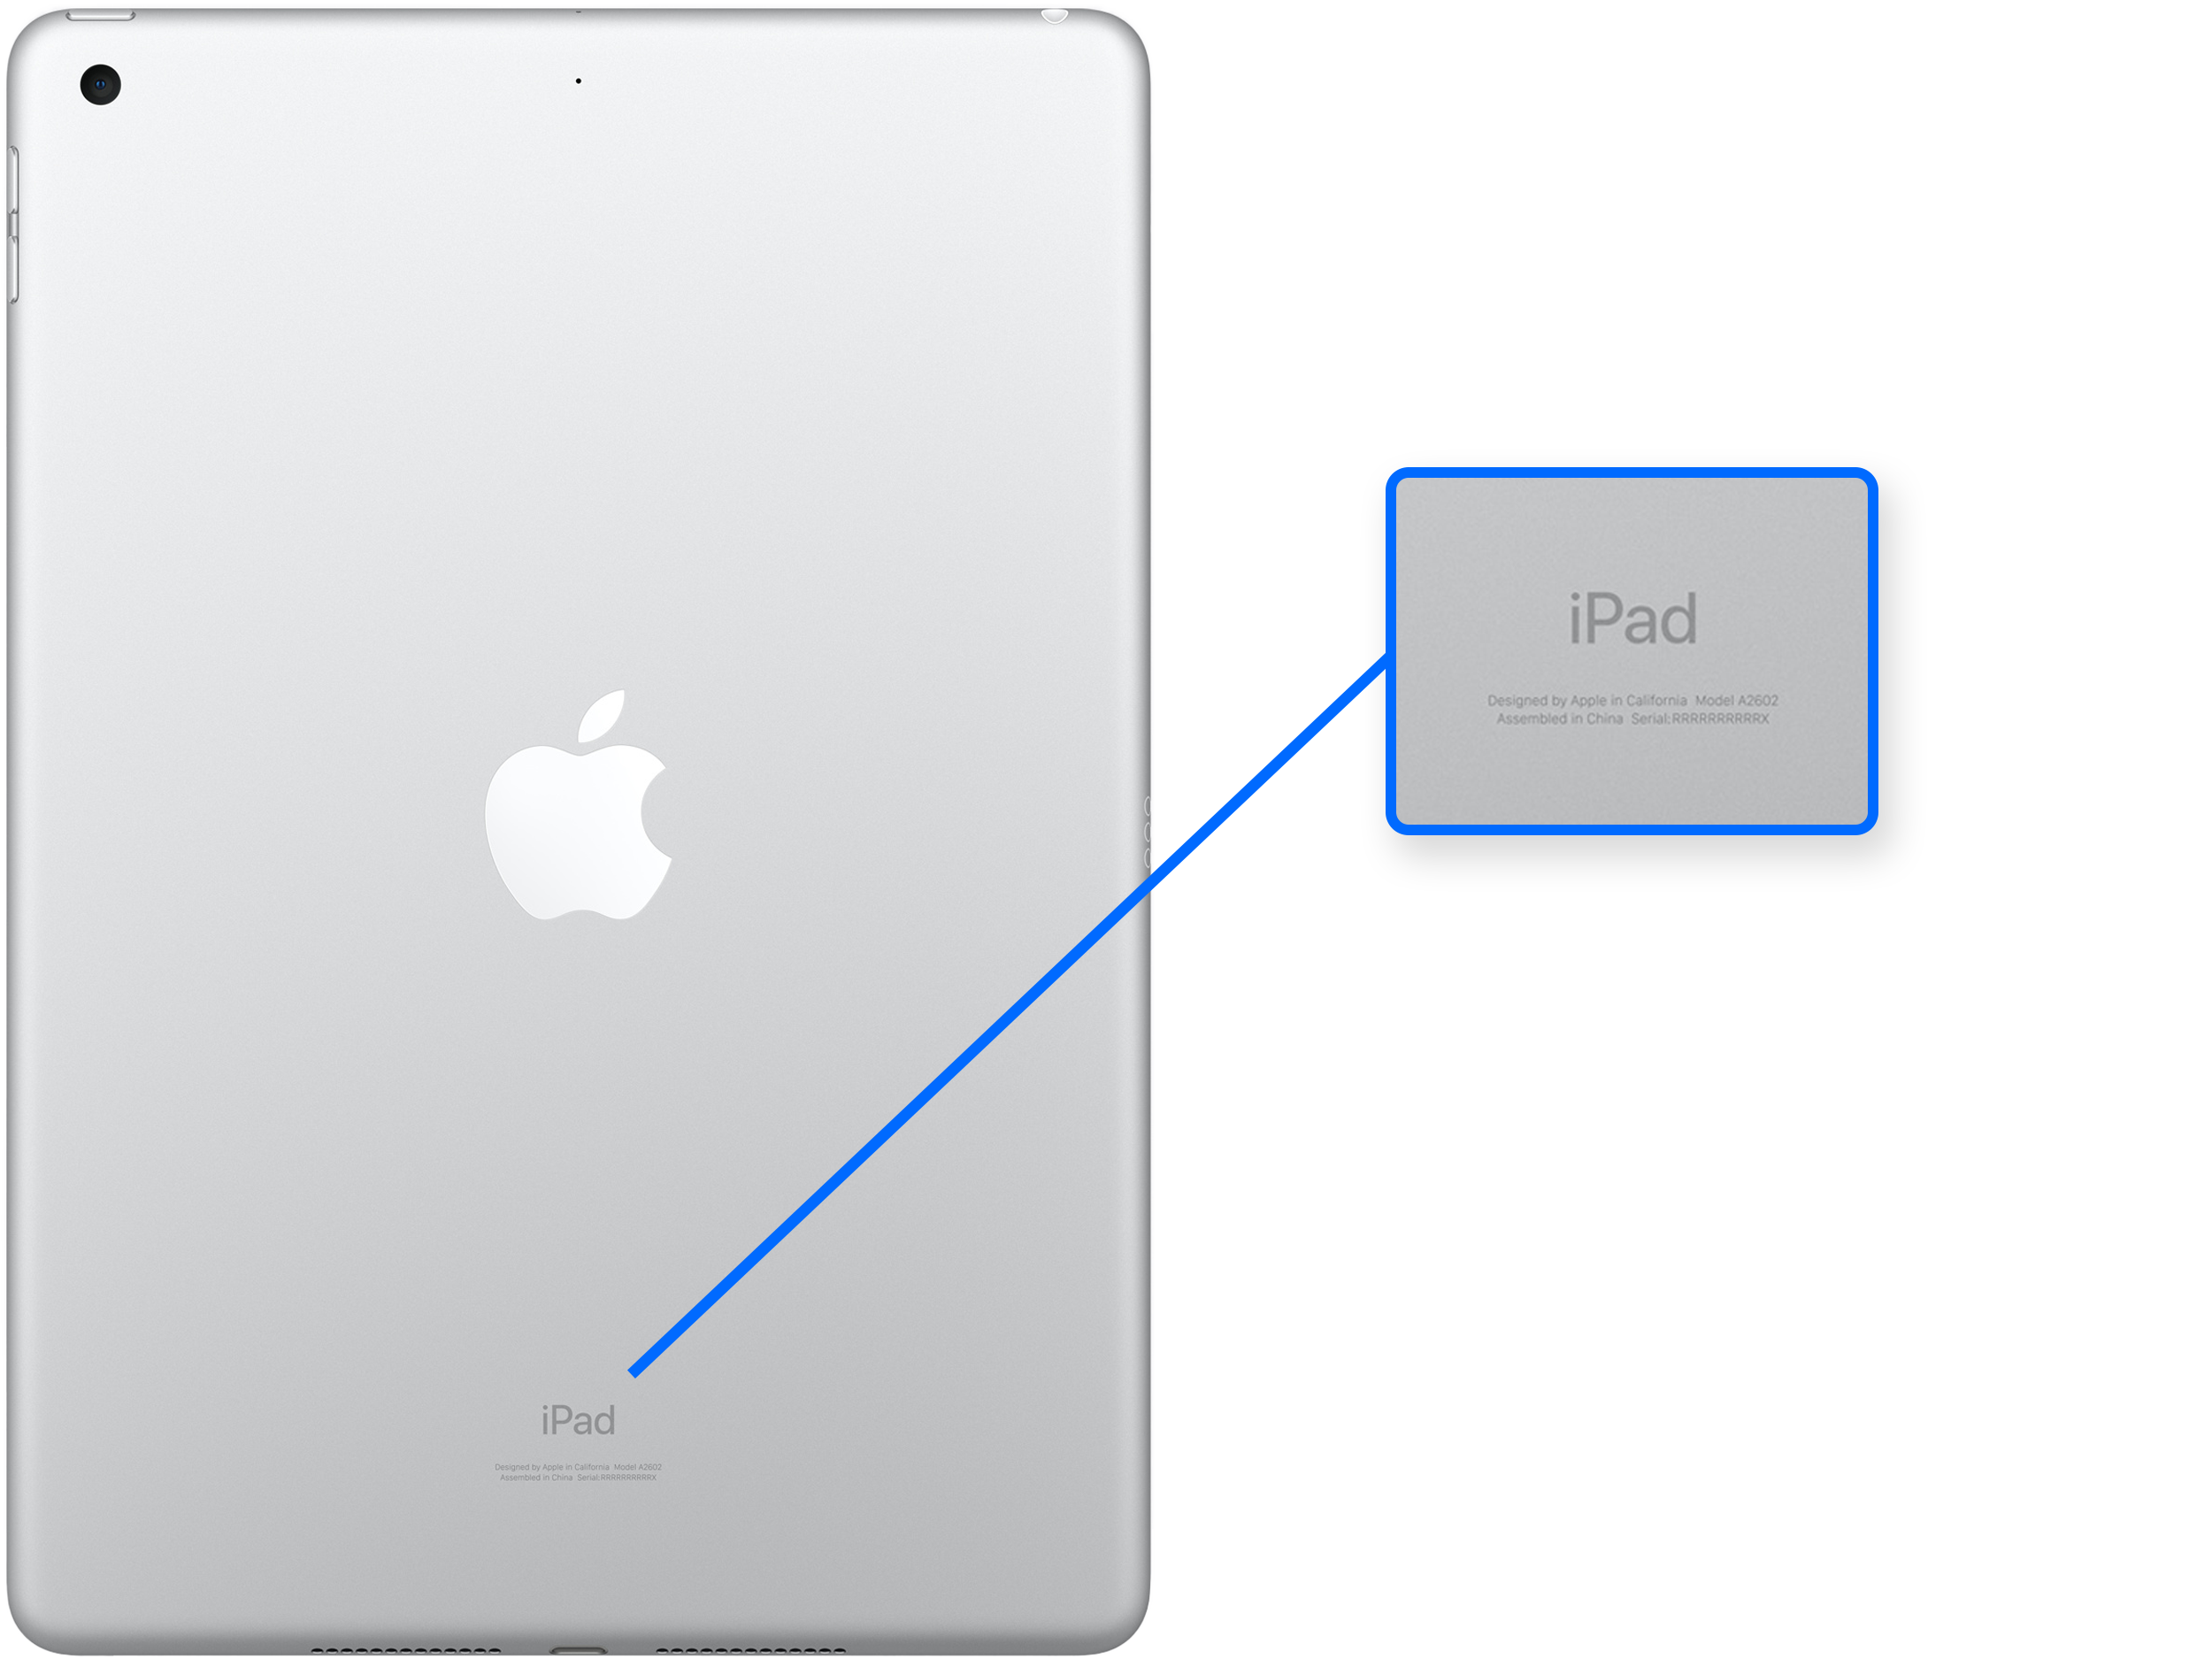 Comparativa entre iPad y iPad mini